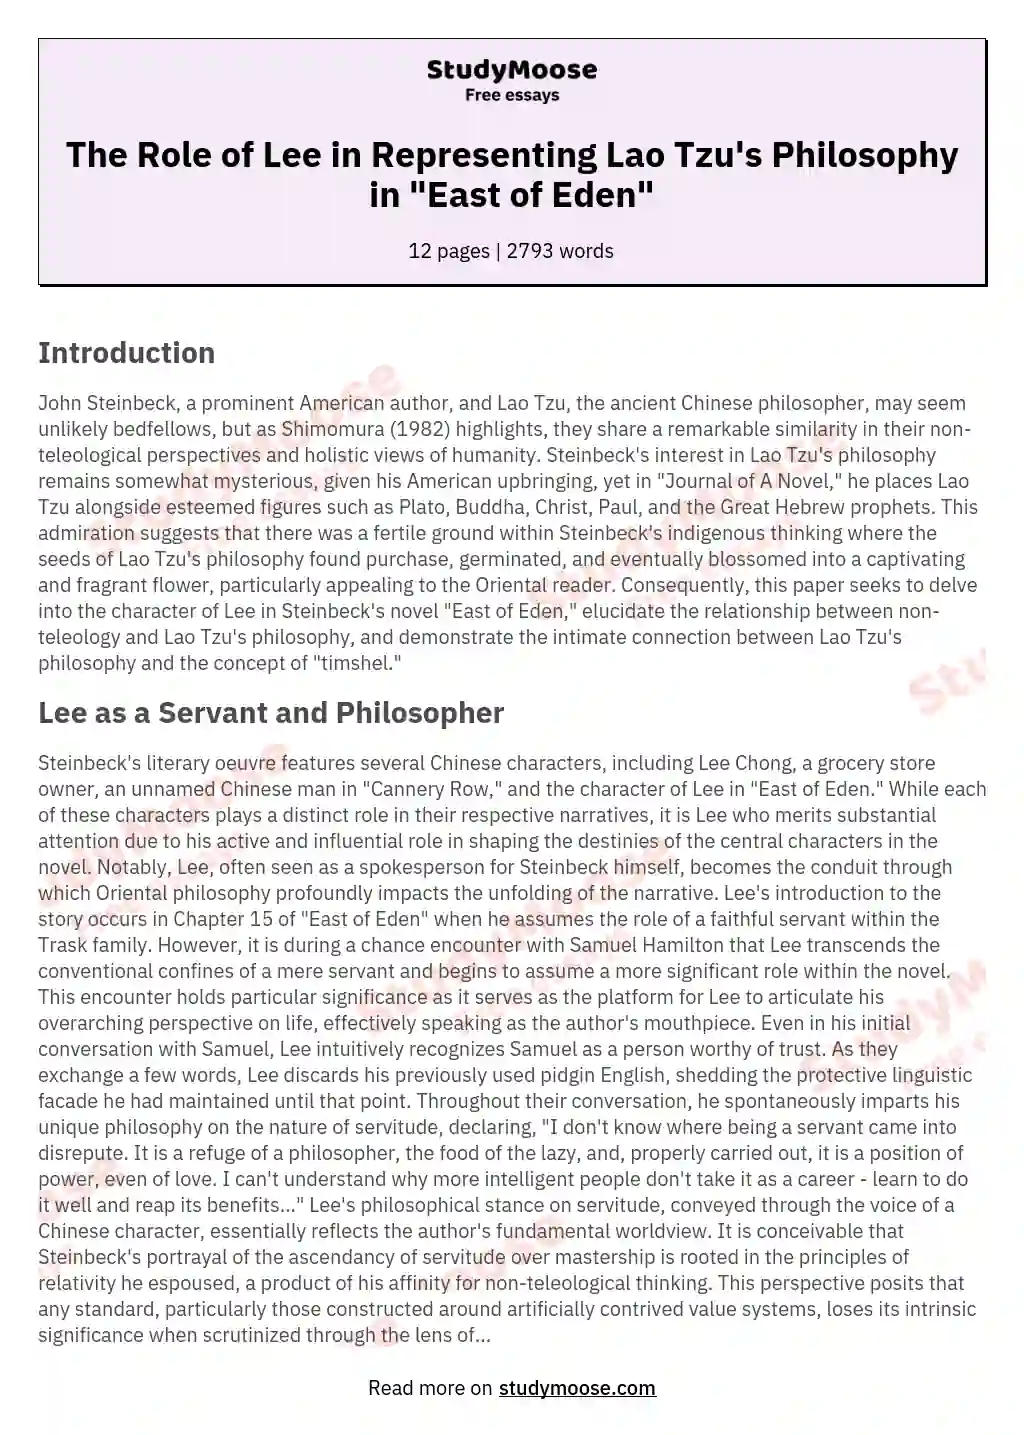 The Role of Lee in Representing Lao Tzu's Philosophy in "East of Eden" essay